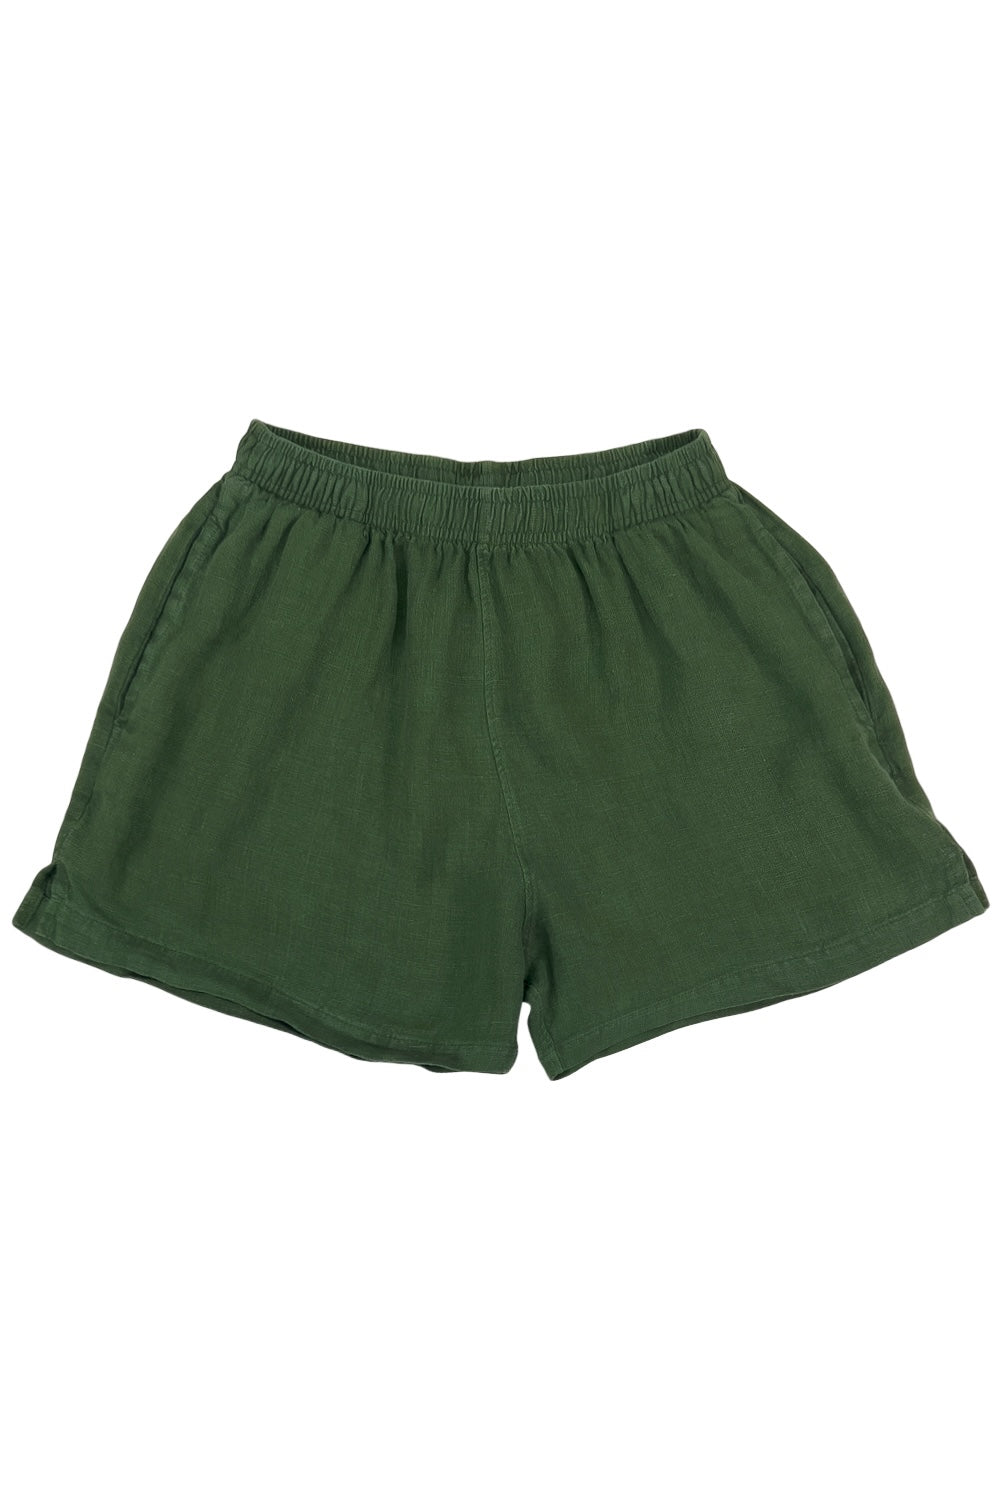 Makena 100% Hemp Short | Jungmaven Hemp Clothing & Accessories / Color: Hunter Green